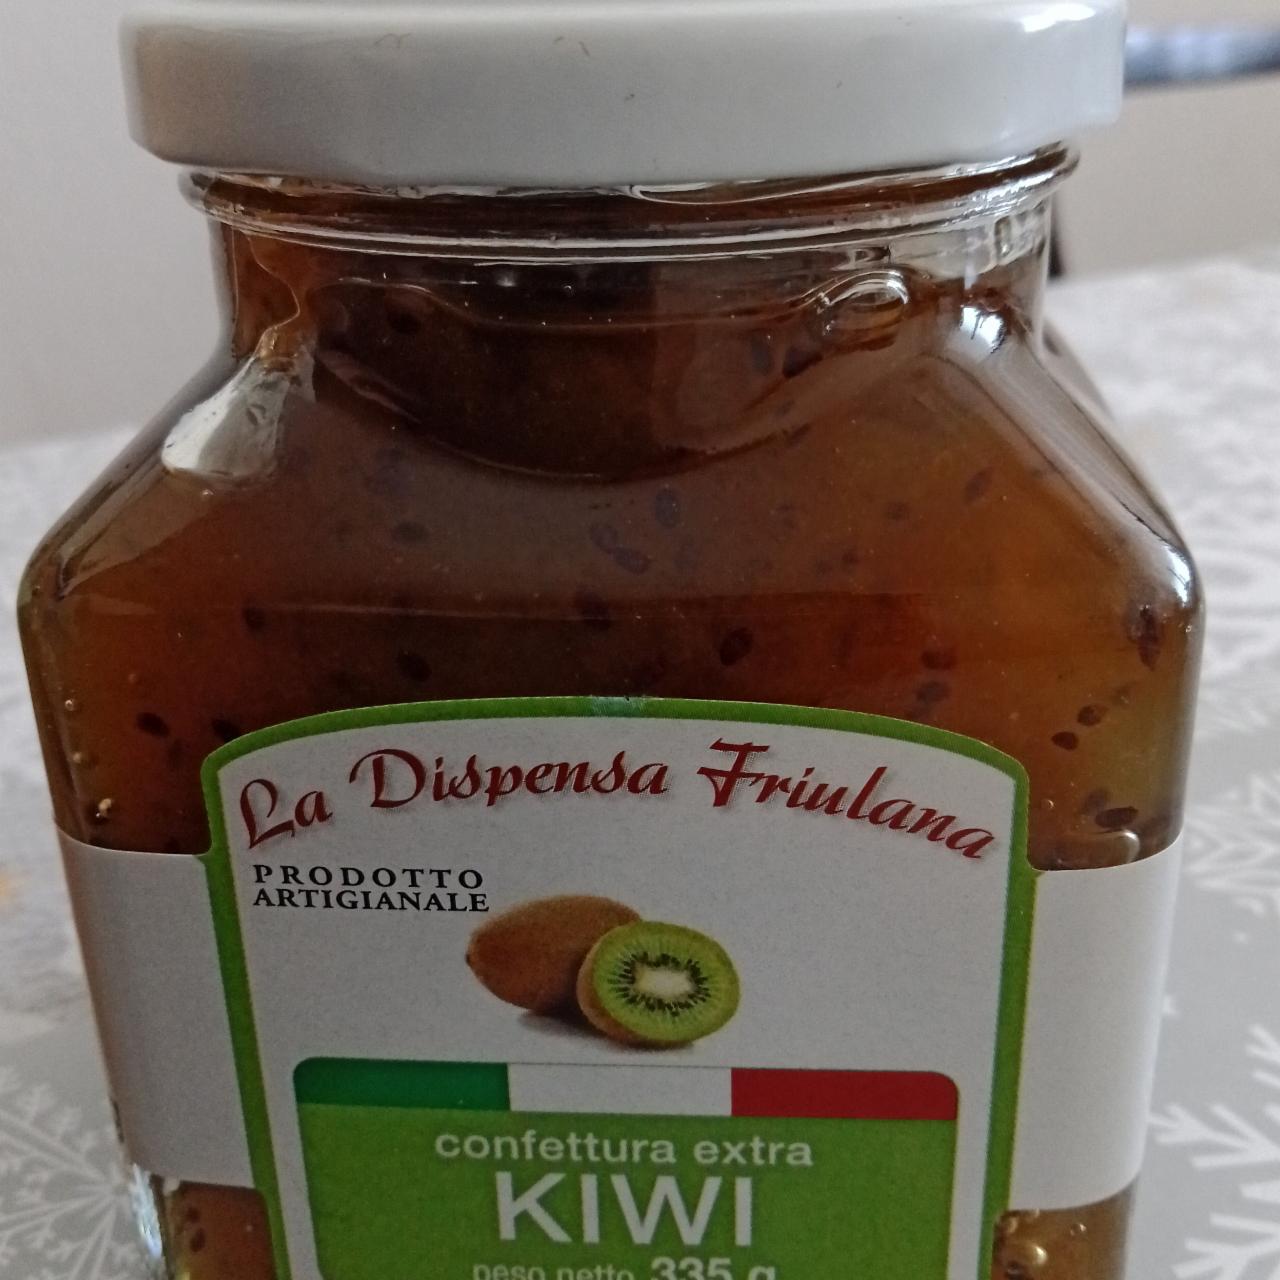 Fotografie - Confettura extra KIWI La Dispensa Friulana